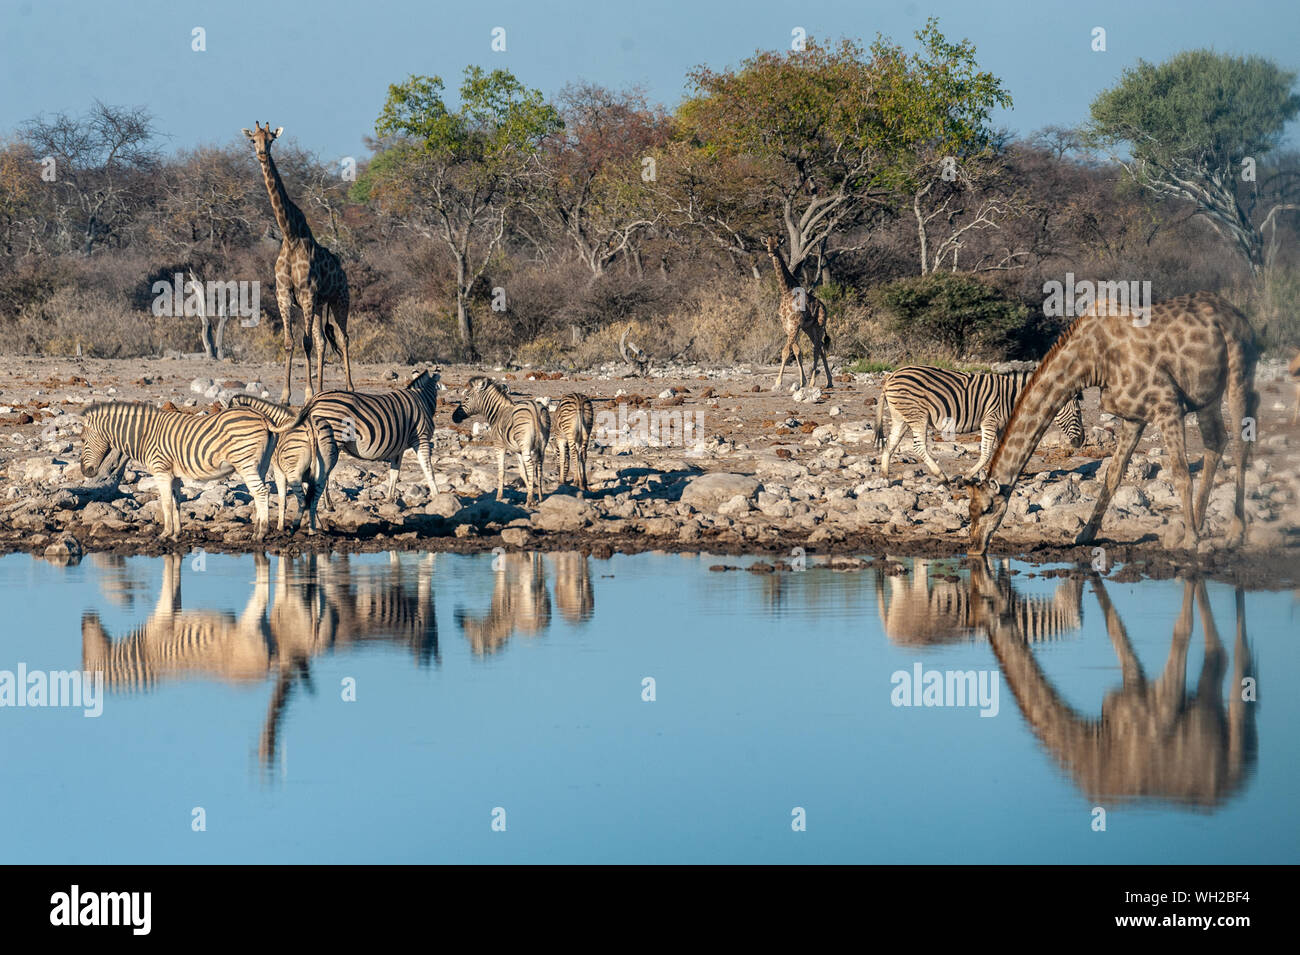 A group of Angolan Giraffe - Giraffa giraffa angolensis- and Burchells zebra -Equus quagga burchellii- drinking from a waterhole, while being reflected in the surface of the water. Etosha, Namibia. Stock Photo